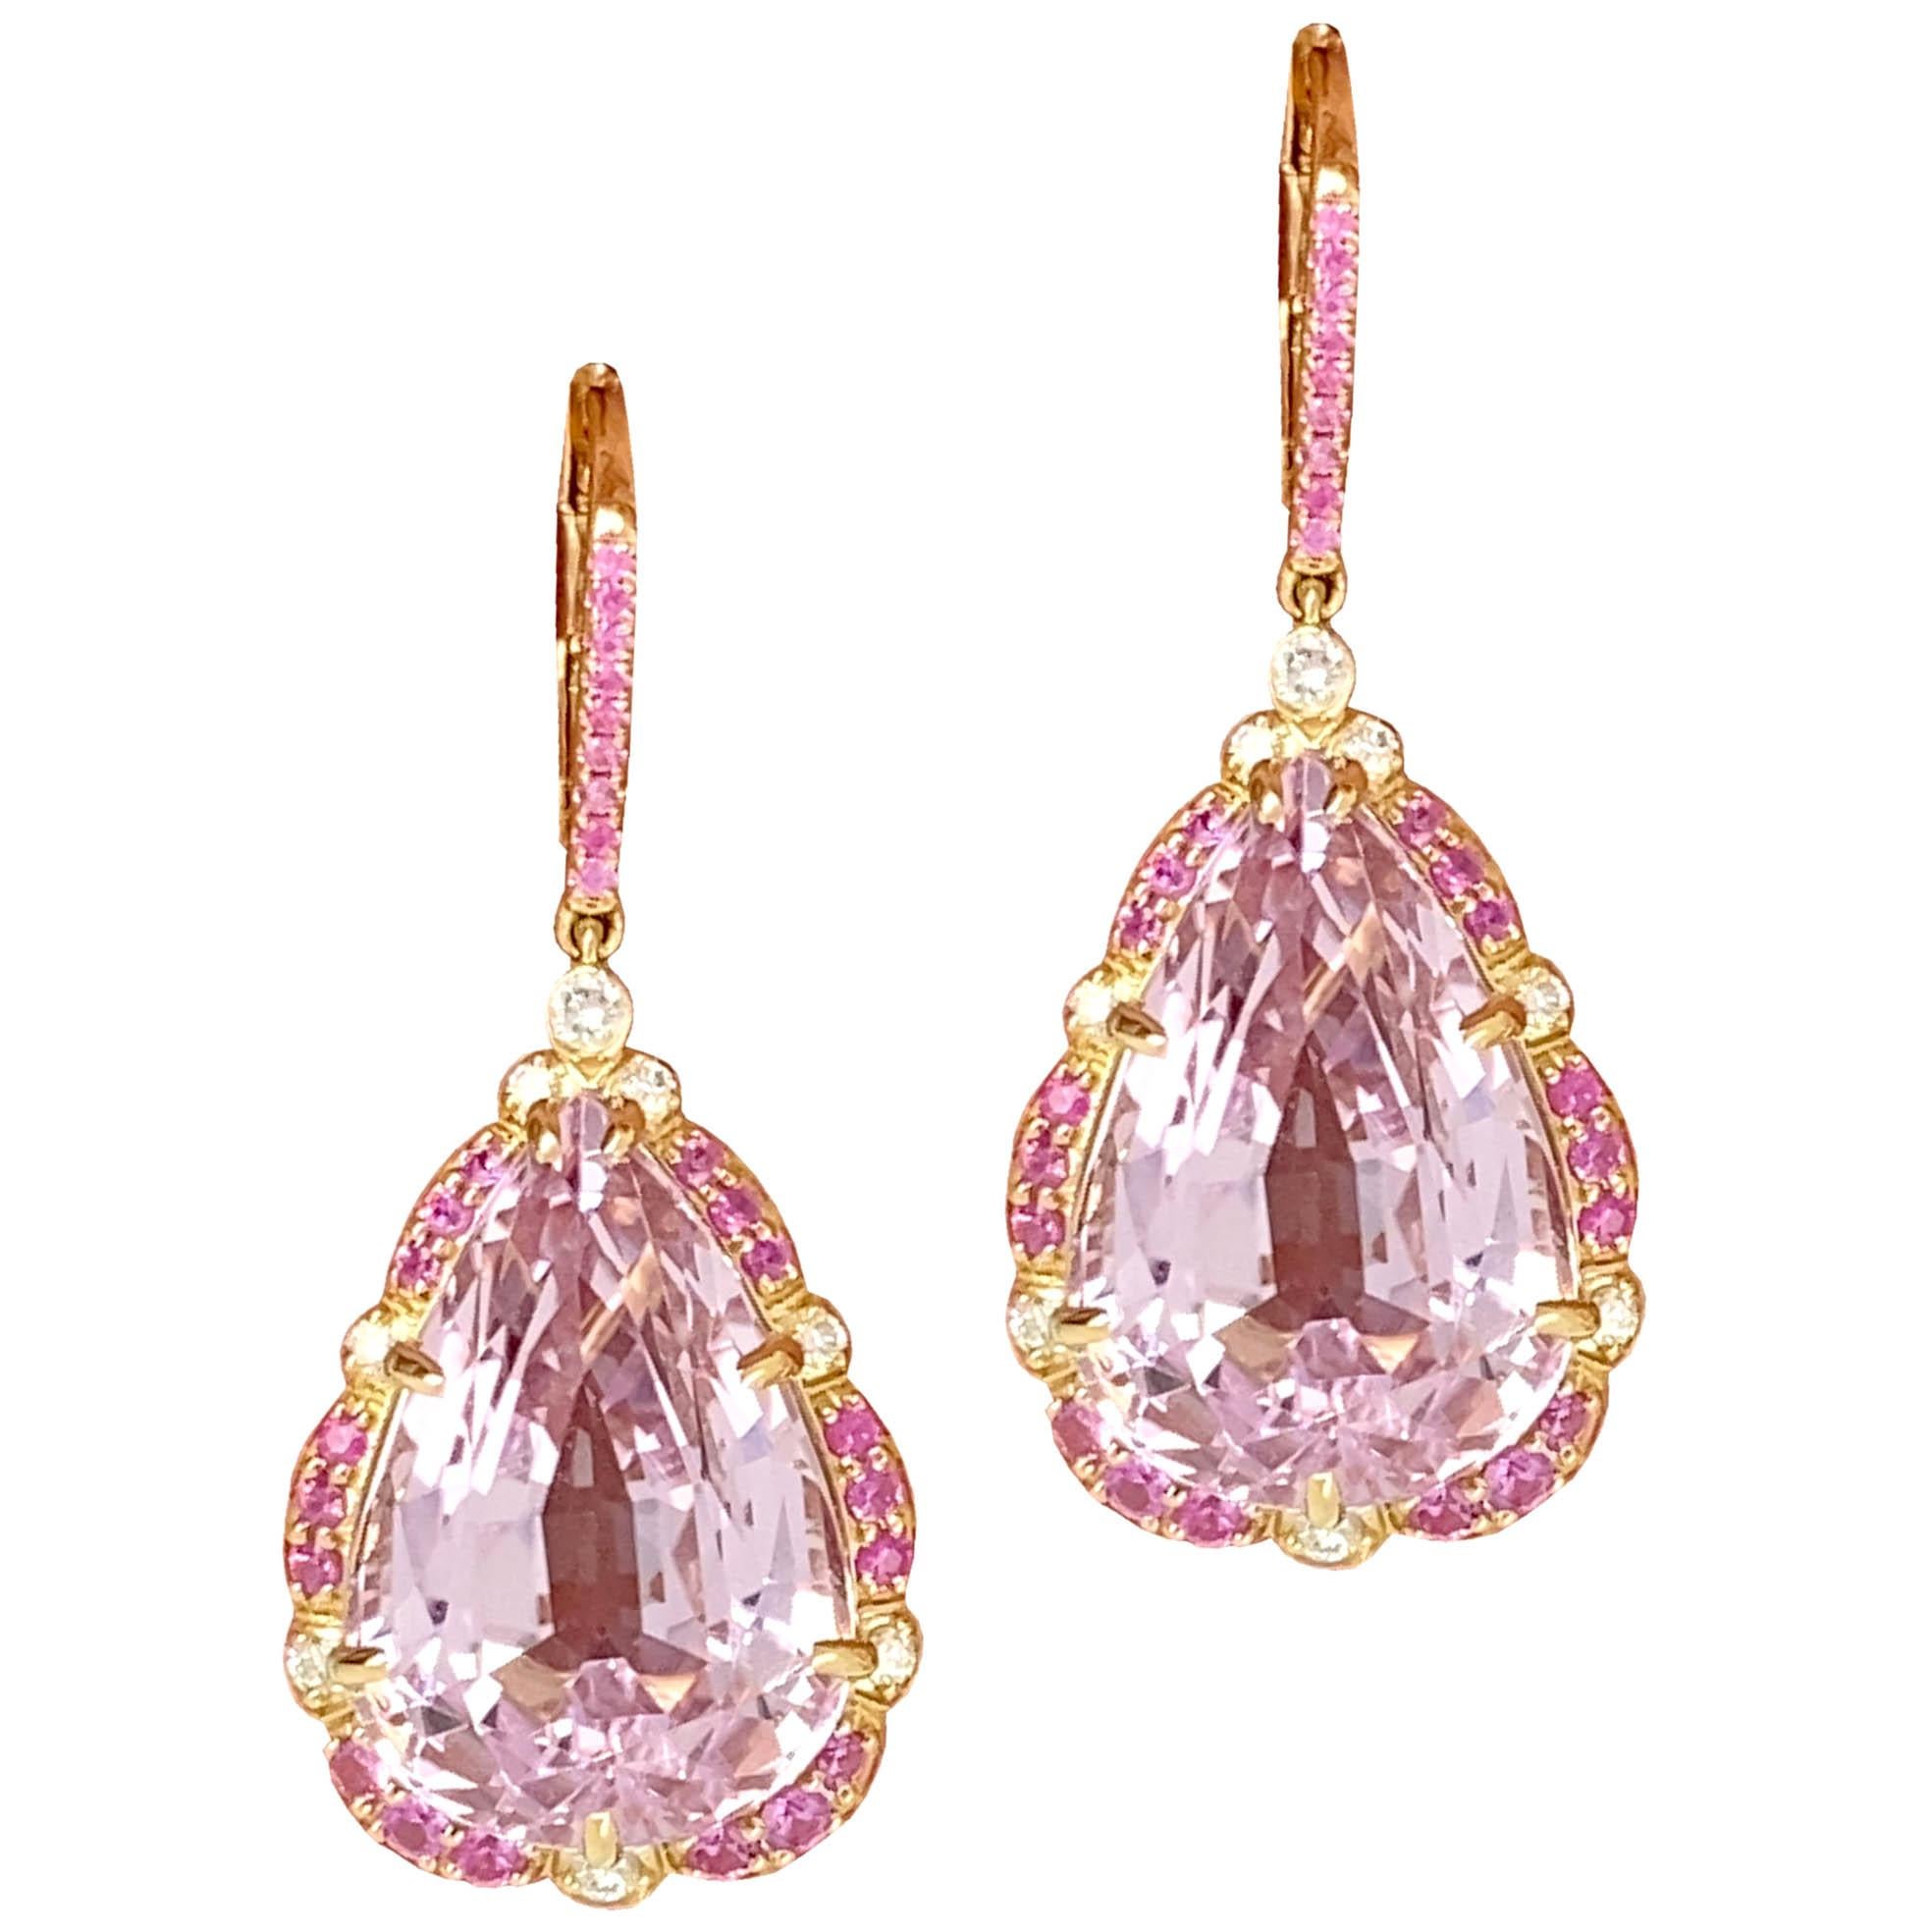 Goshwara Pear Shape Kunzite with Diamonds and Pink Sapphire Earrings